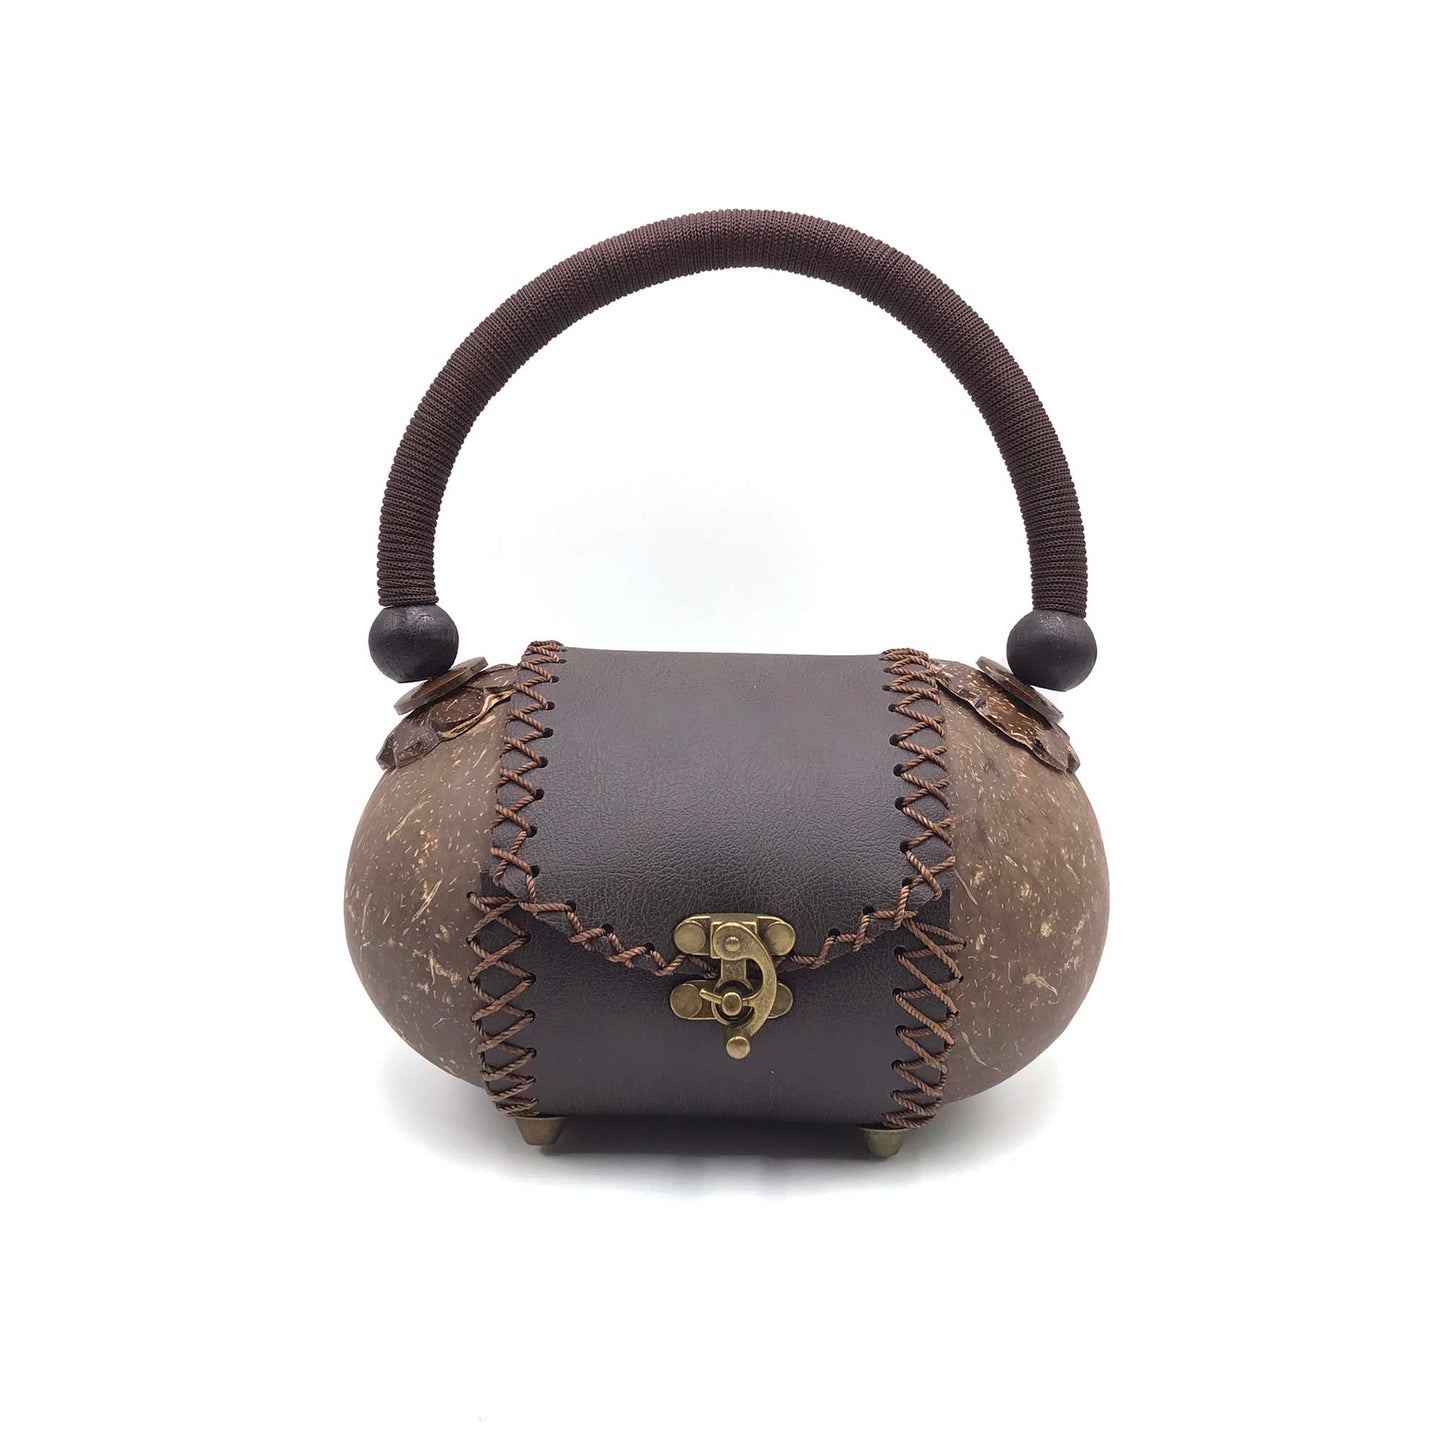 Handbag hand-crafted from coconut shells